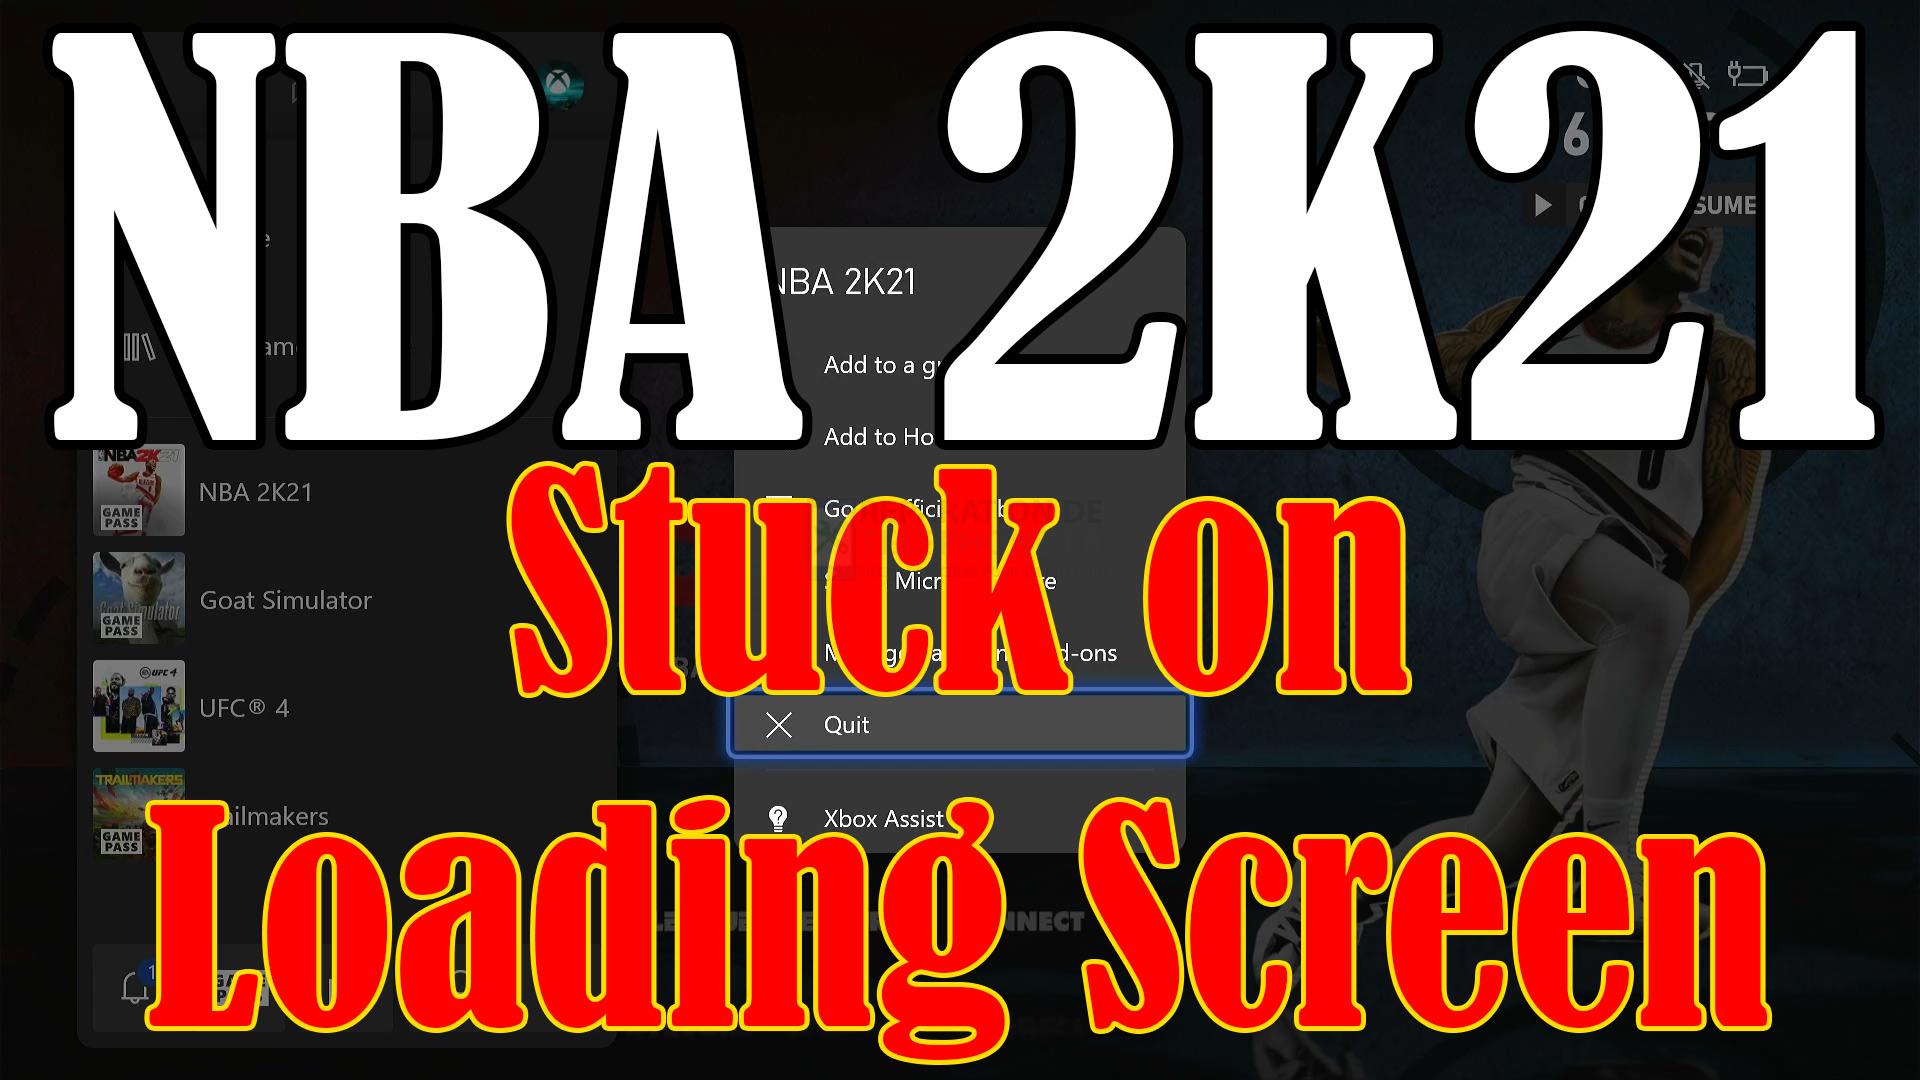 Comment réparer NBA 2K21 Stuck On Loading Screen sur Xbox Series S